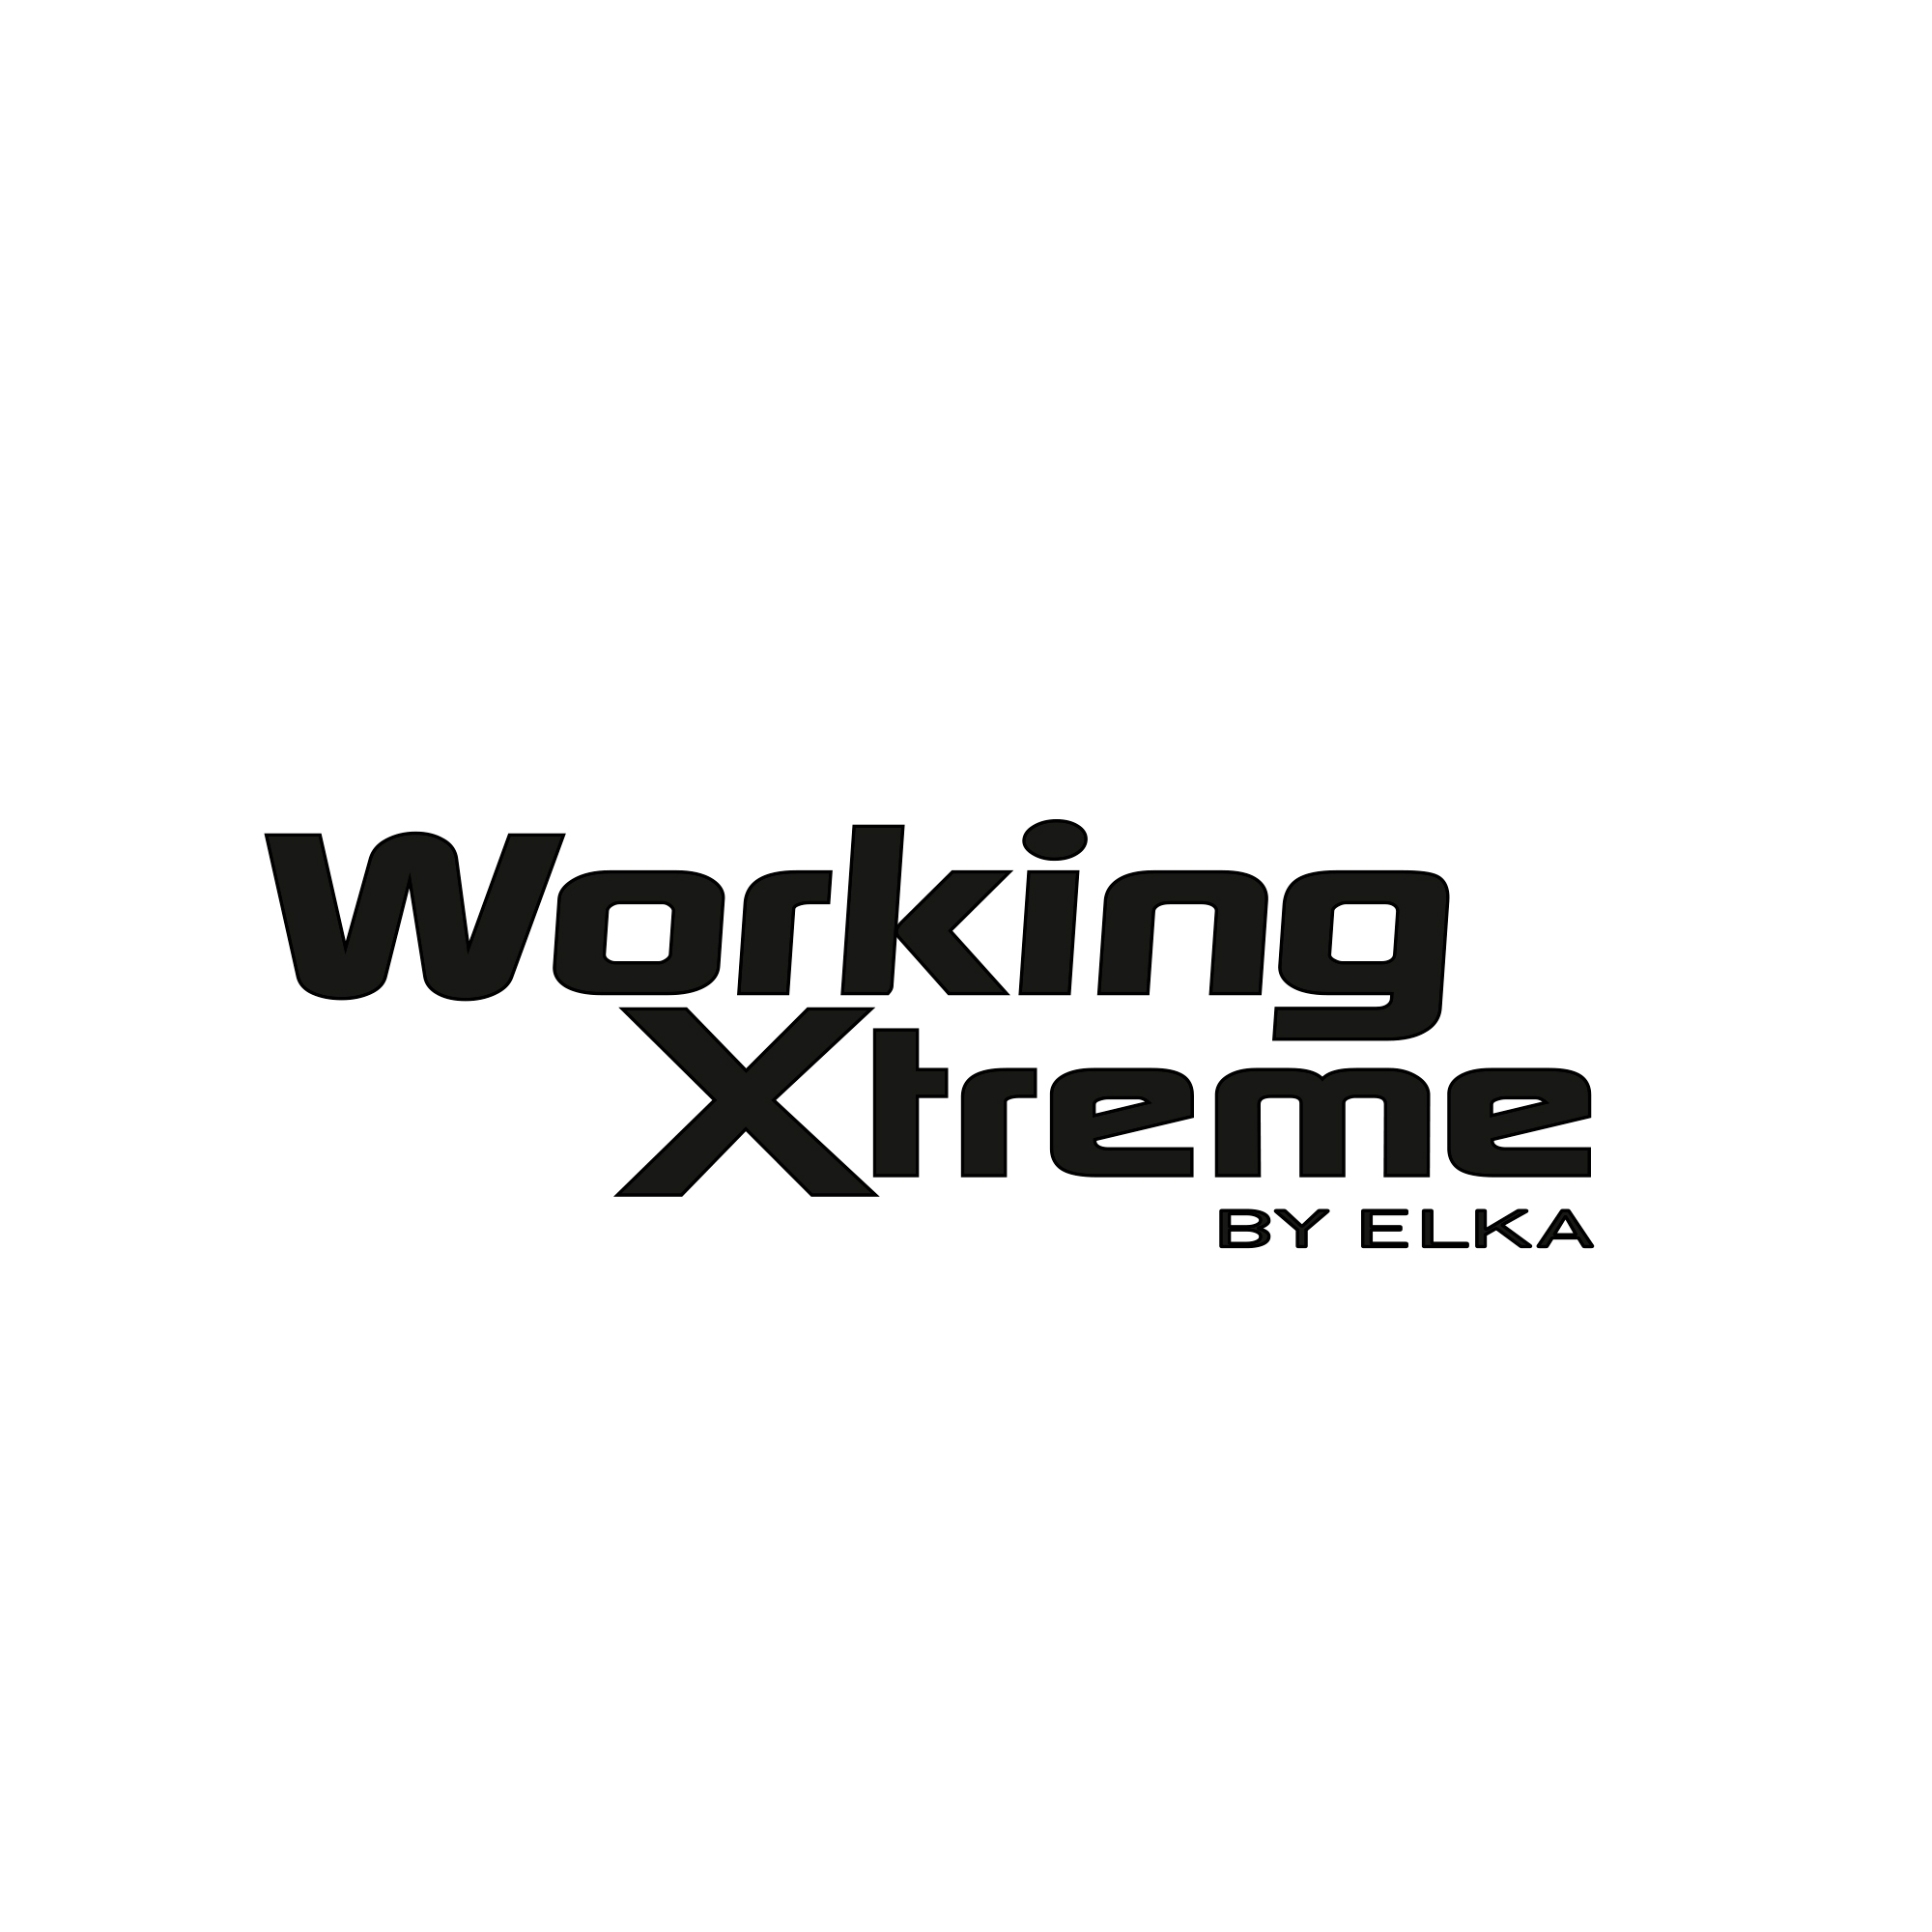 Working Xtreme